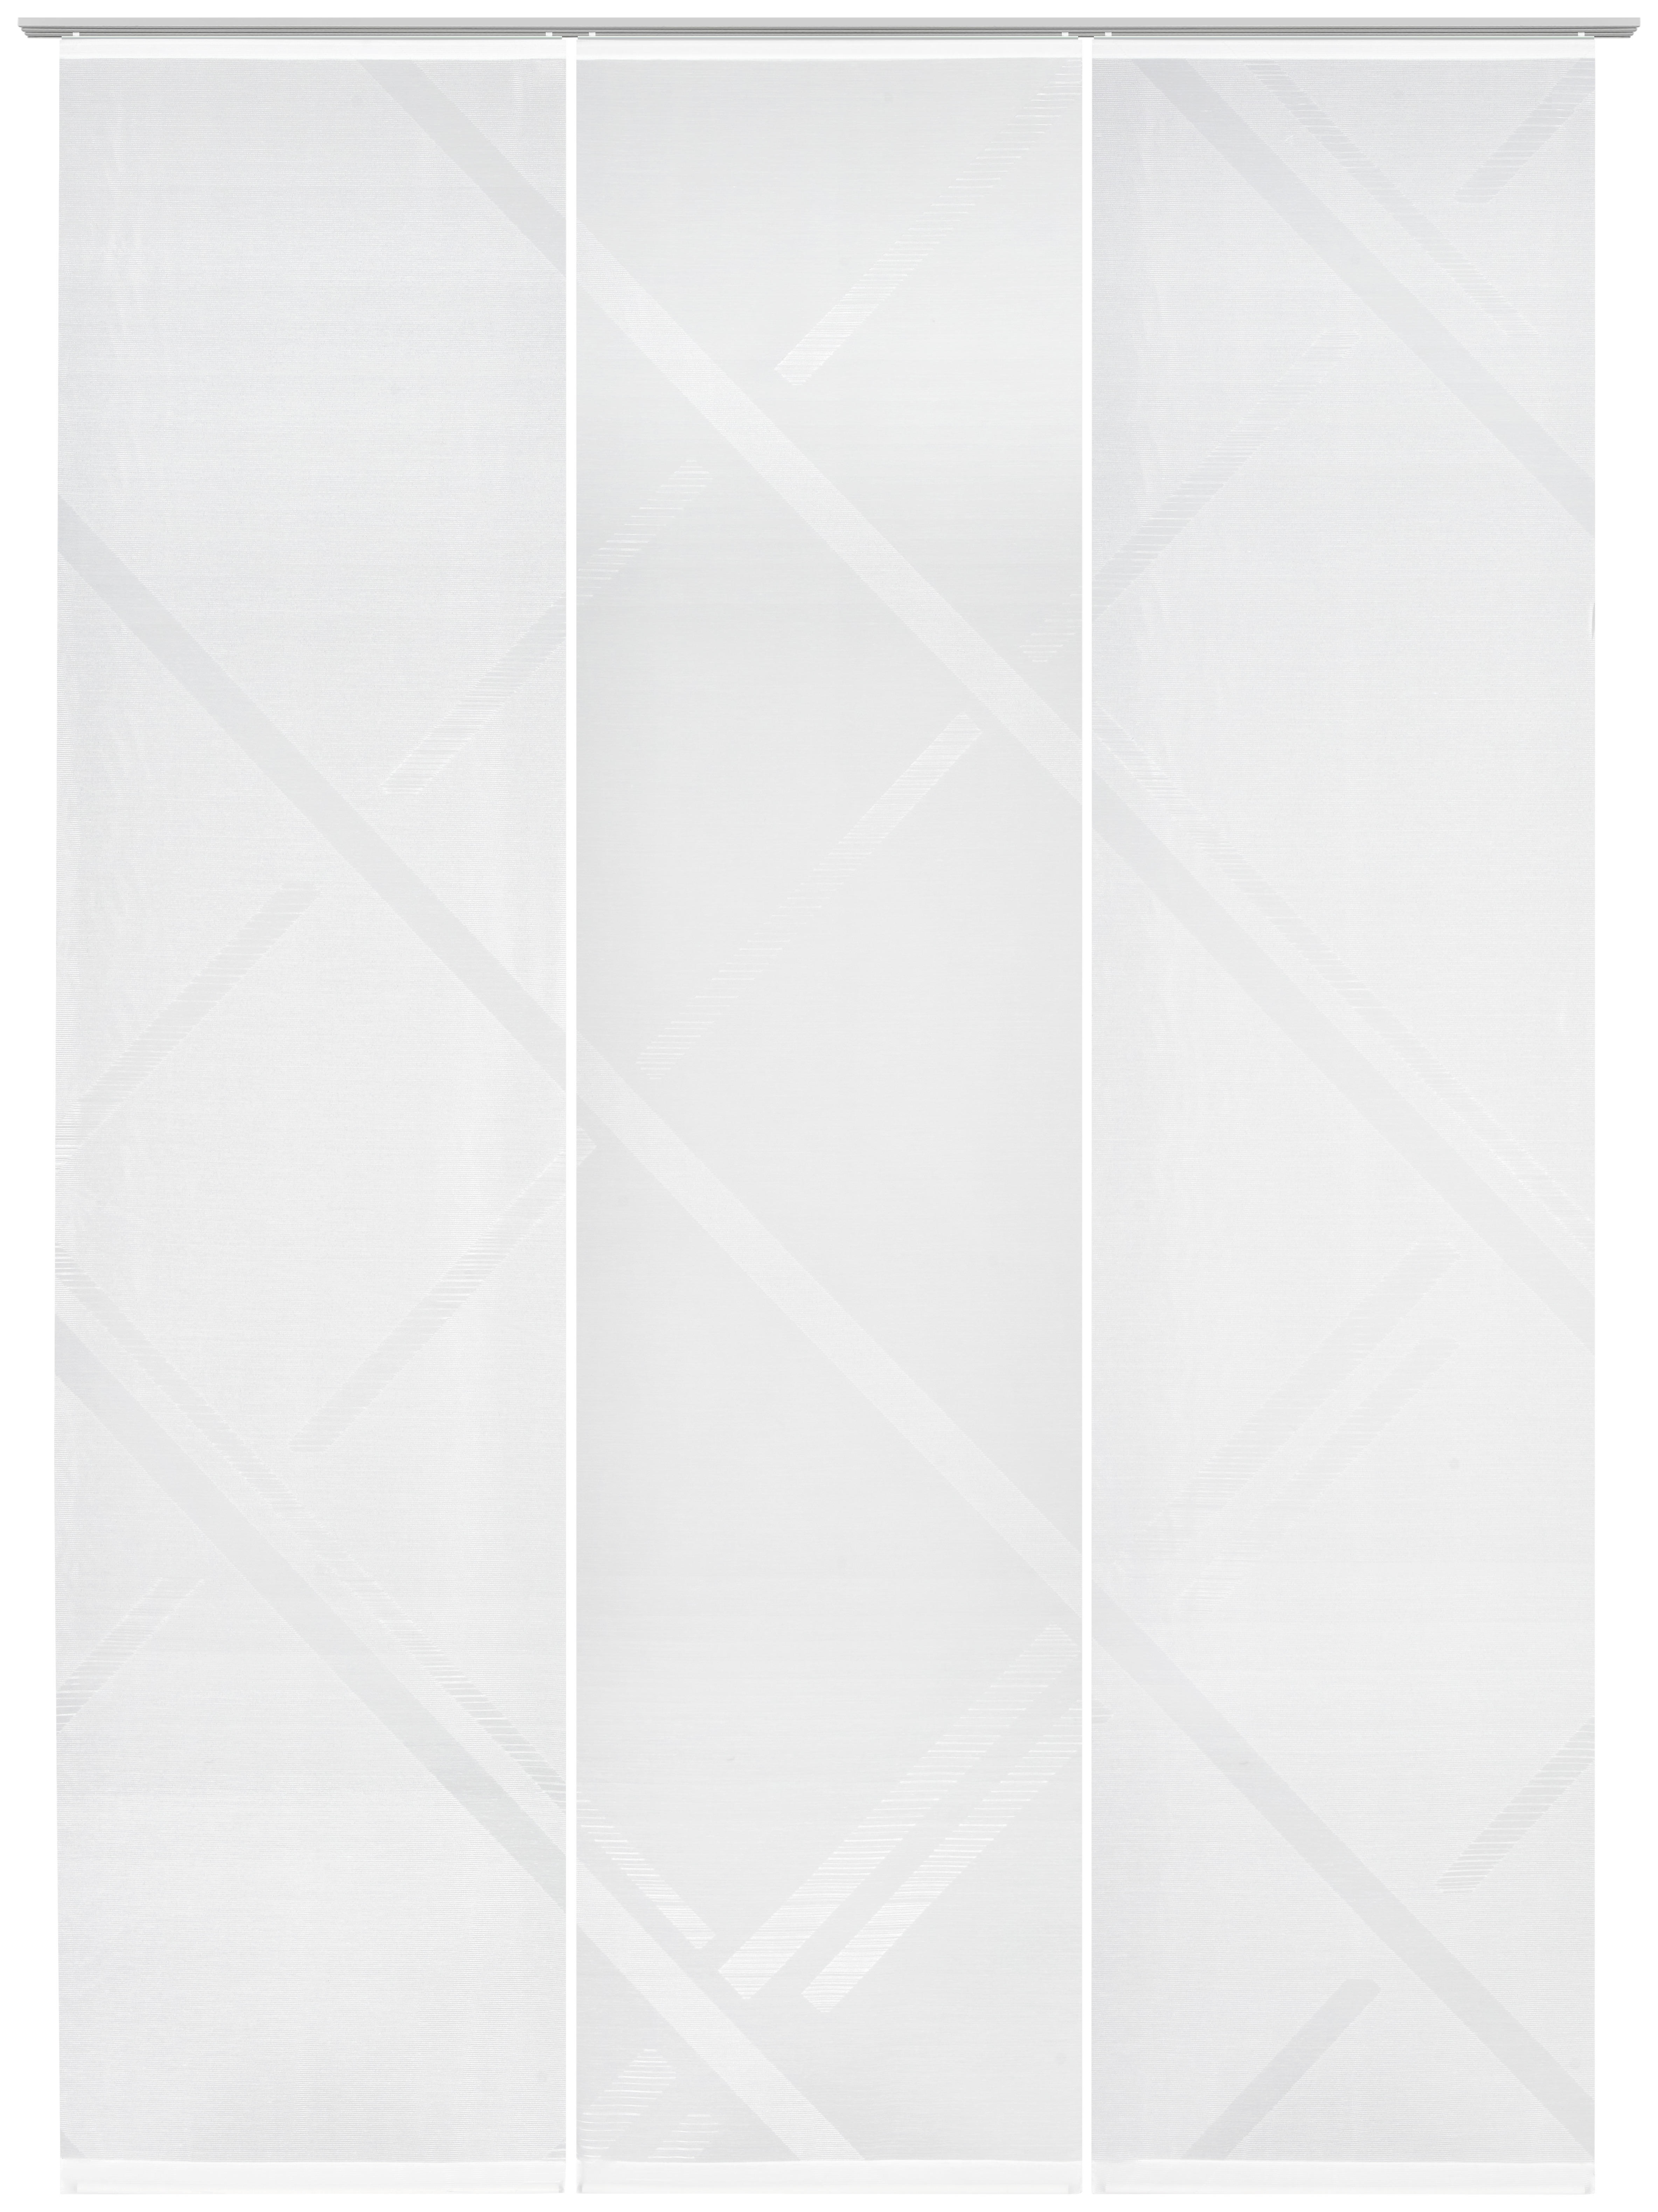 FLÄCHENVORHANG 3ER SET  3 Stück  halbtransparent   60/245 cm  - Weiß, Design, Textil (60/245cm) - Novel